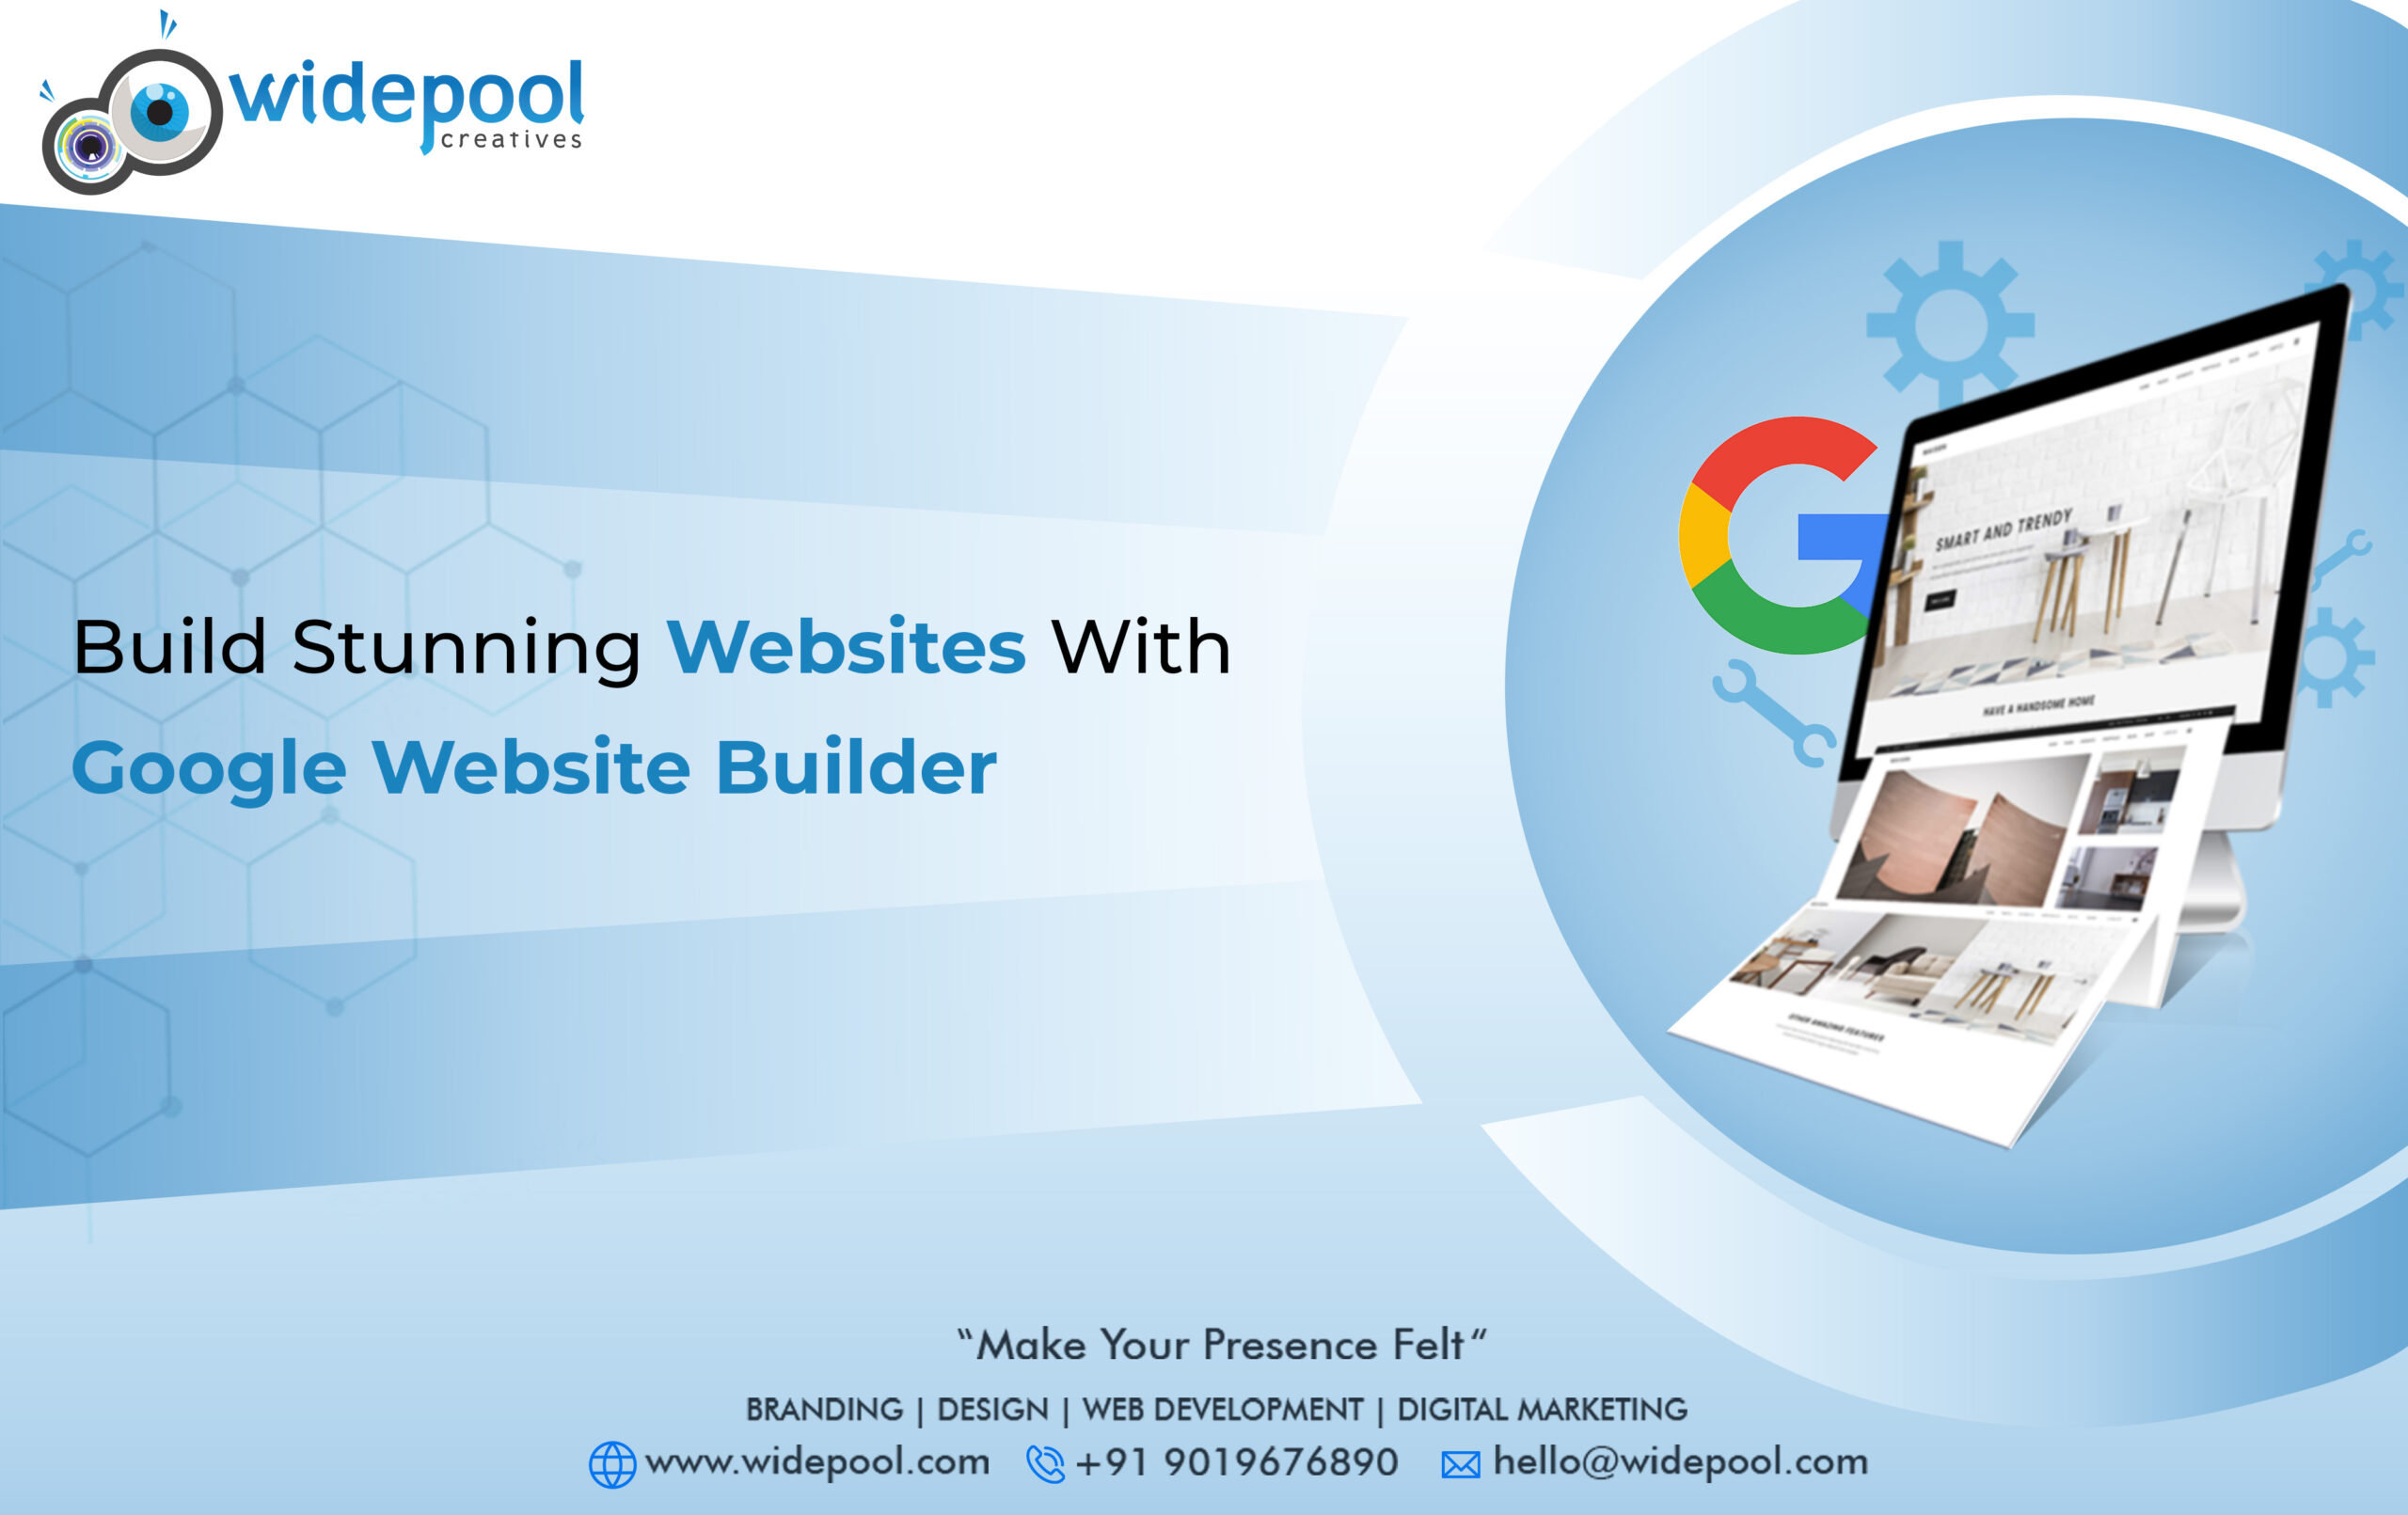 Build Stunning Websites with Google Website Builder